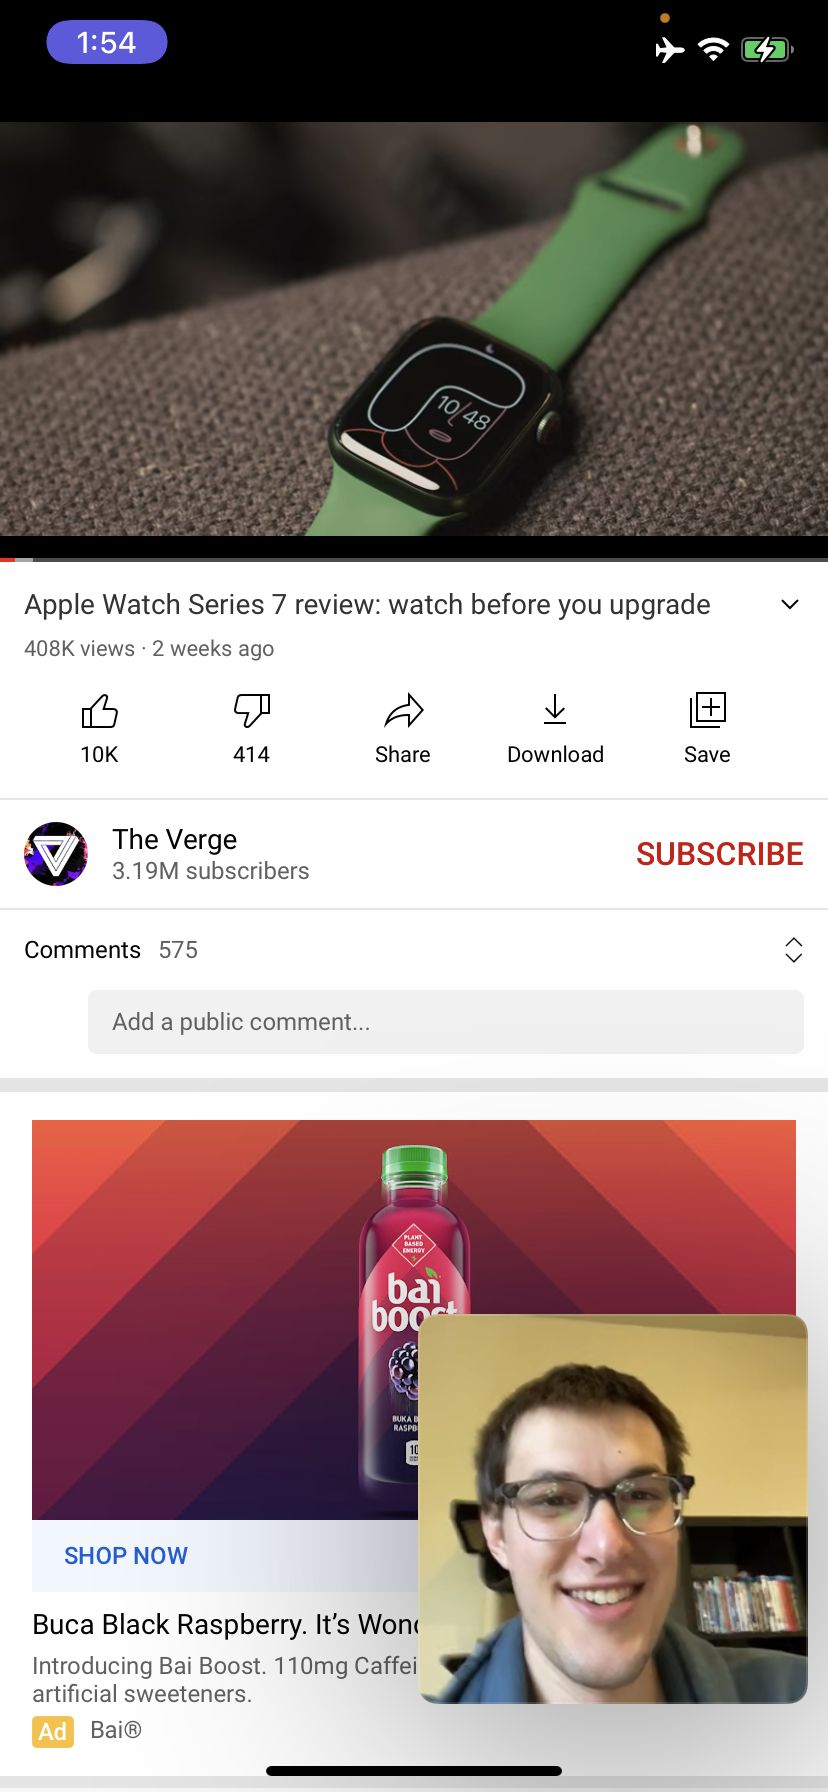 SharePlay les permite a ambos ver el mismo video de YouTube.